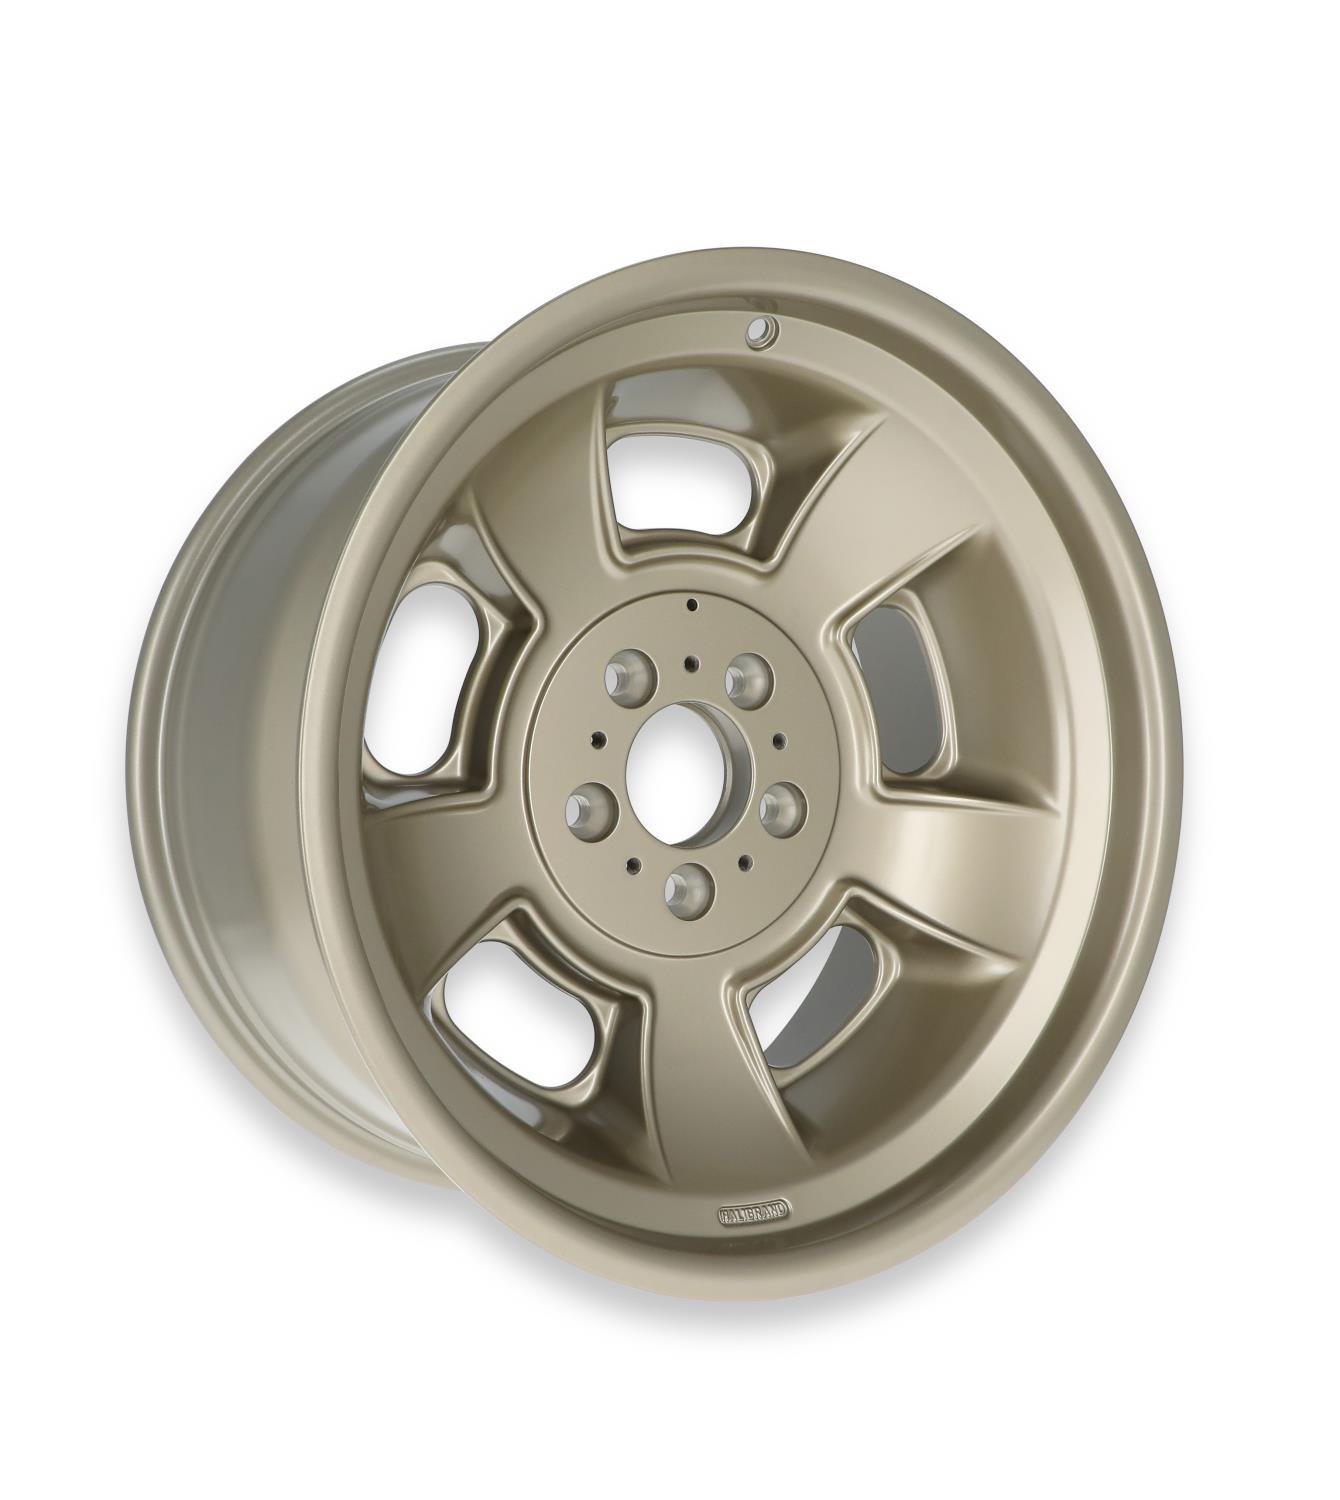 Sprint Rear Wheel, Size: 19x10", Bolt Pattern: 5x5", Backspace: 5.5" [MAG7 - Semi Gloss Clearcoat]